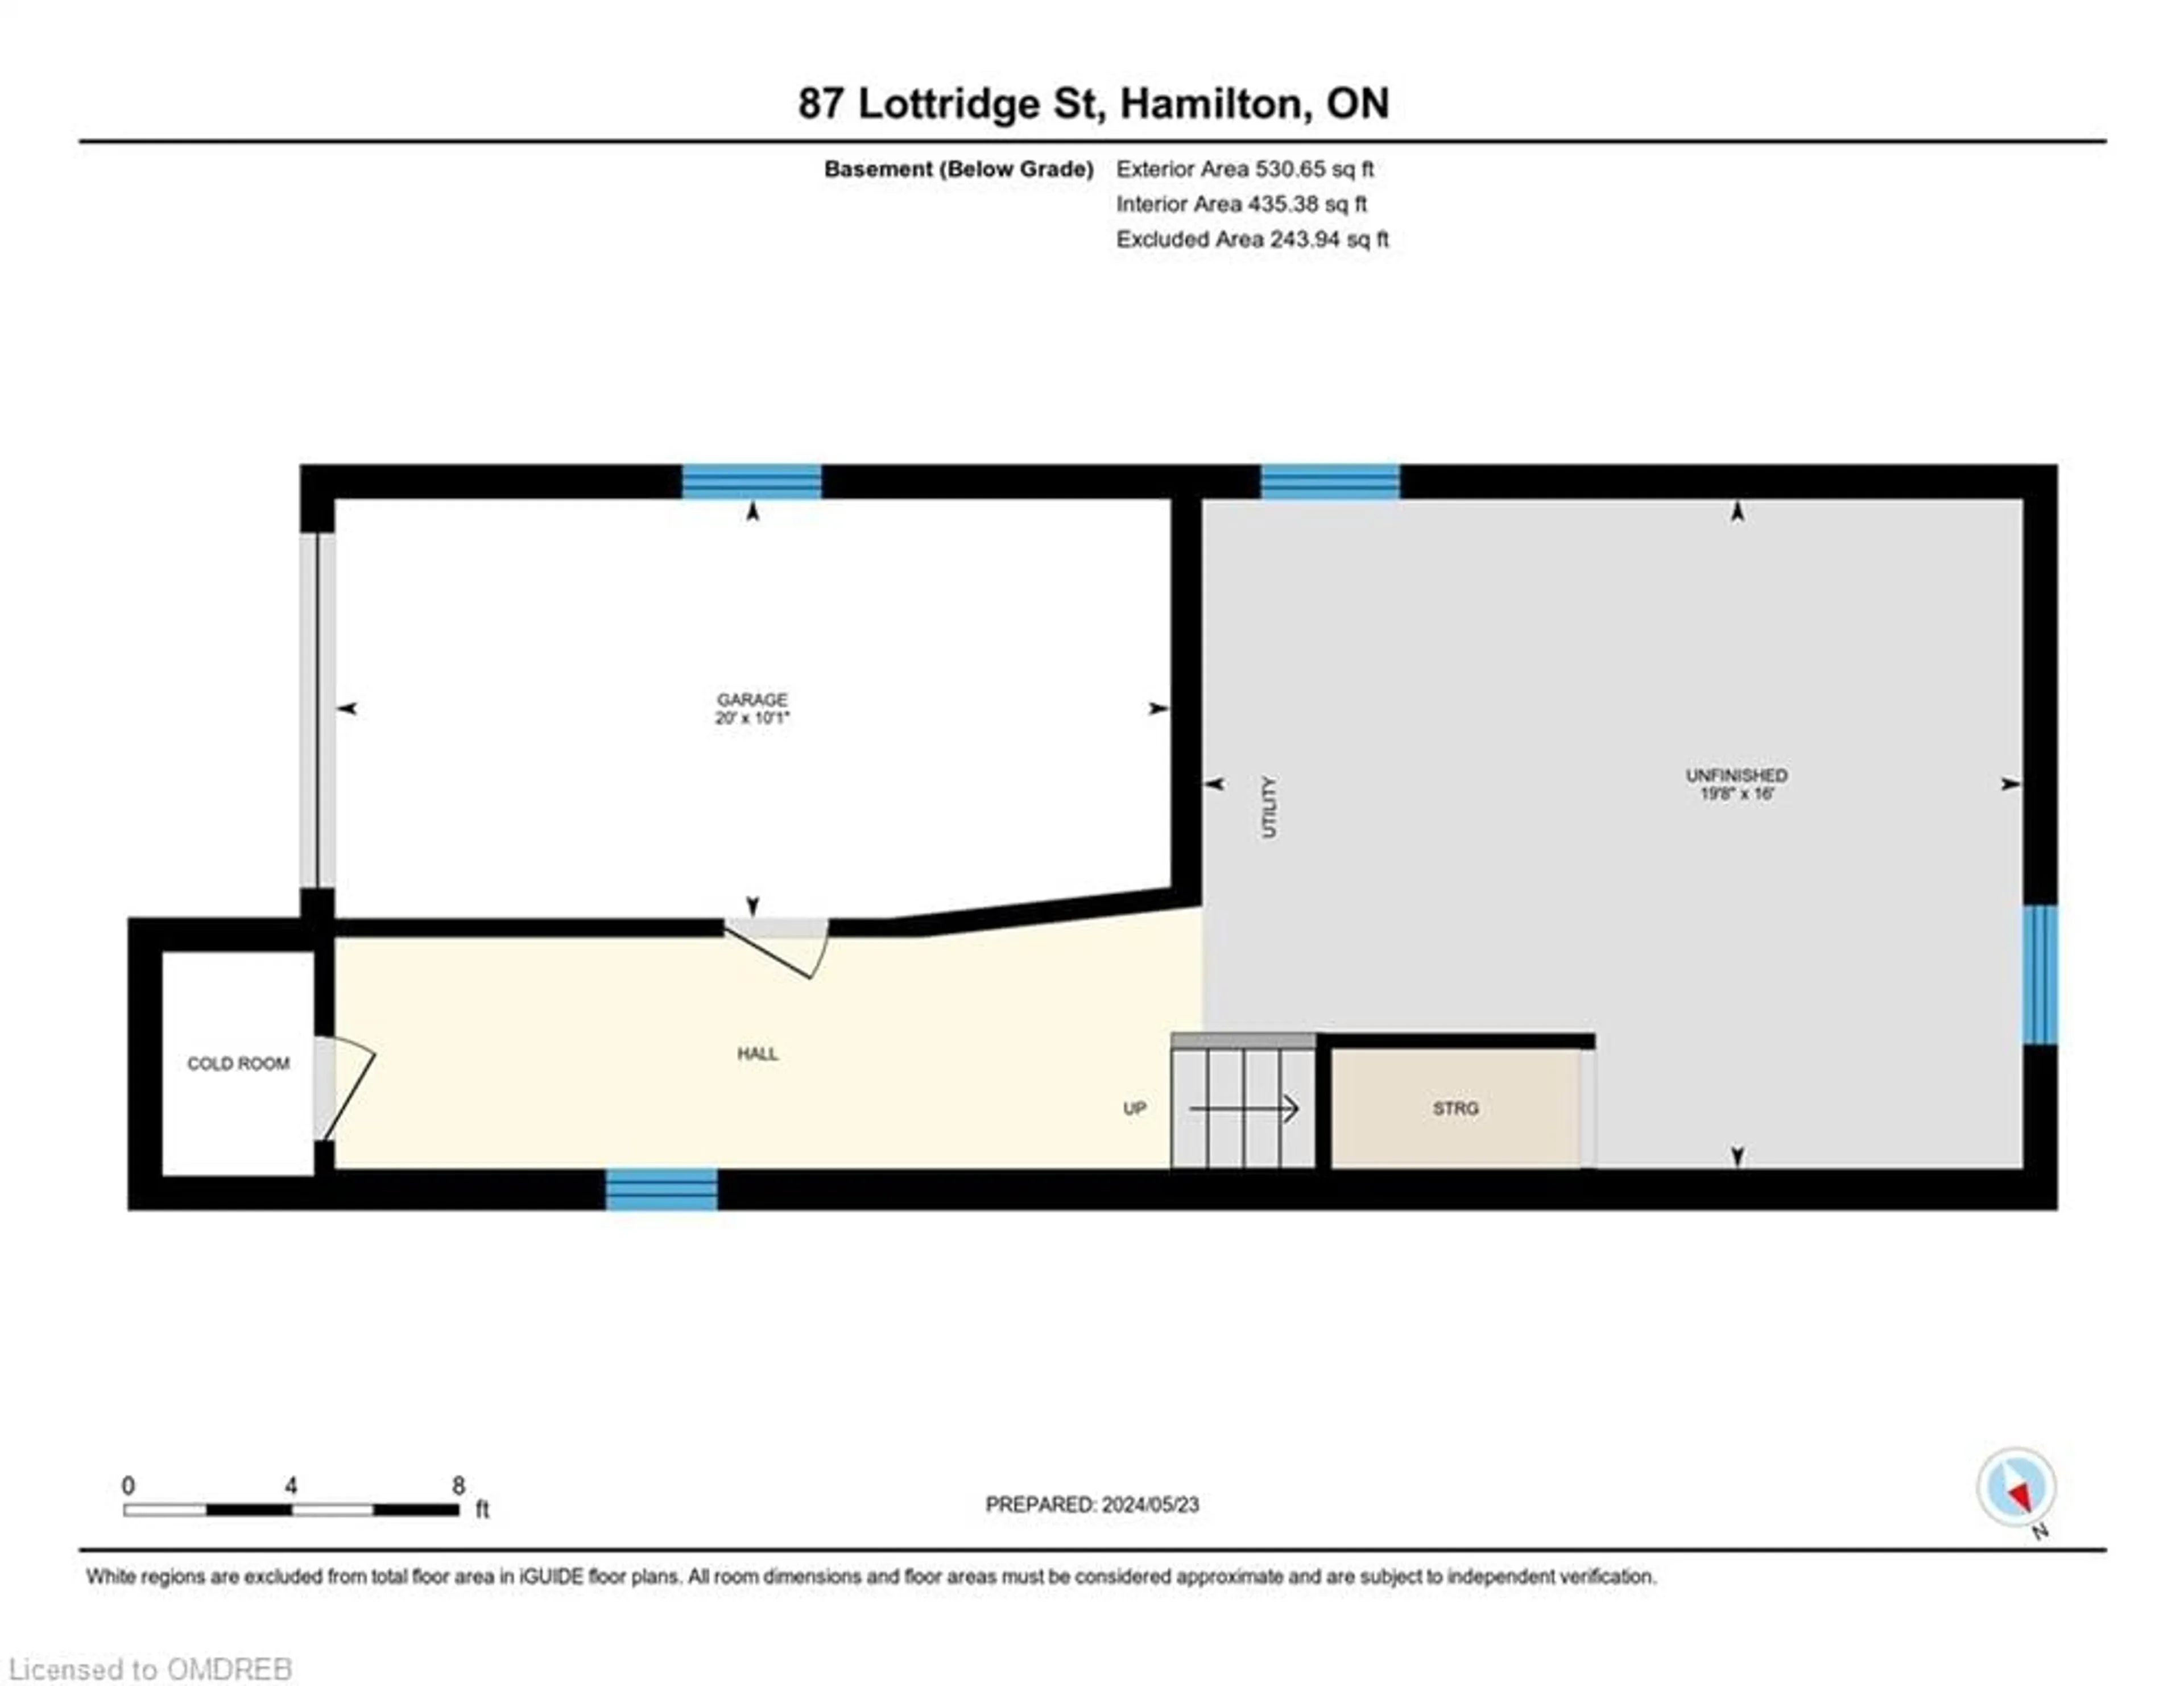 Floor plan for 87 Lottridge St, Hamilton Ontario L8L 6V1